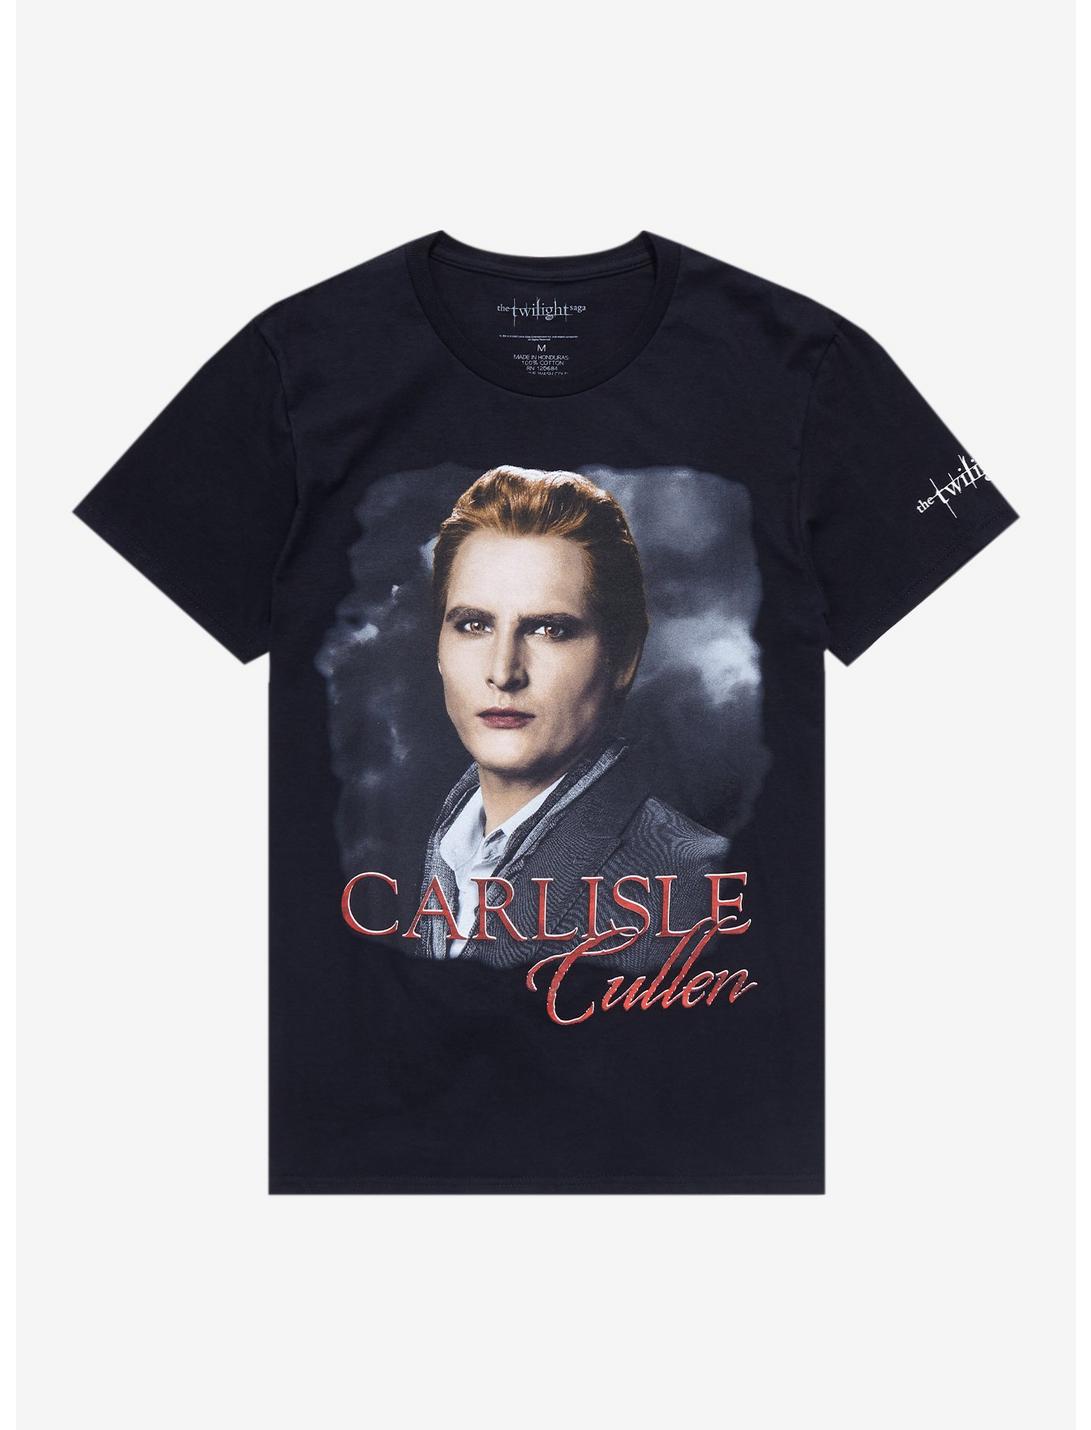 Twilight Carlisle Cullen Boyfriend Fit Girls T-Shirt